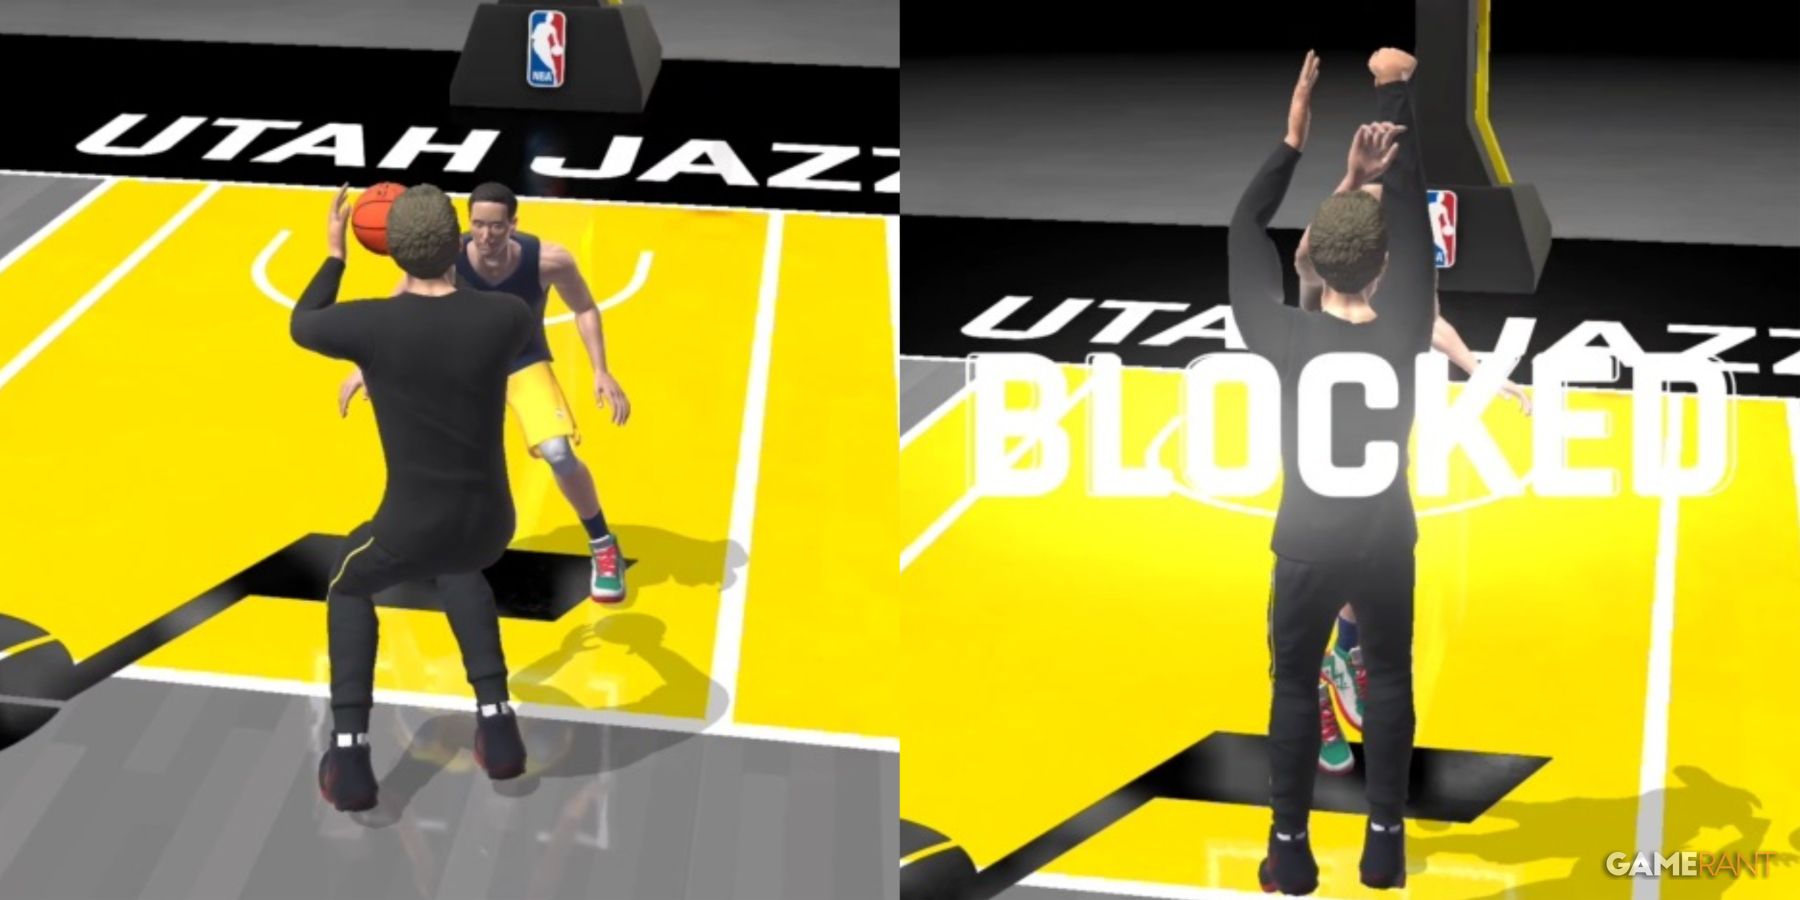 NBA All-World: How To Block Shots